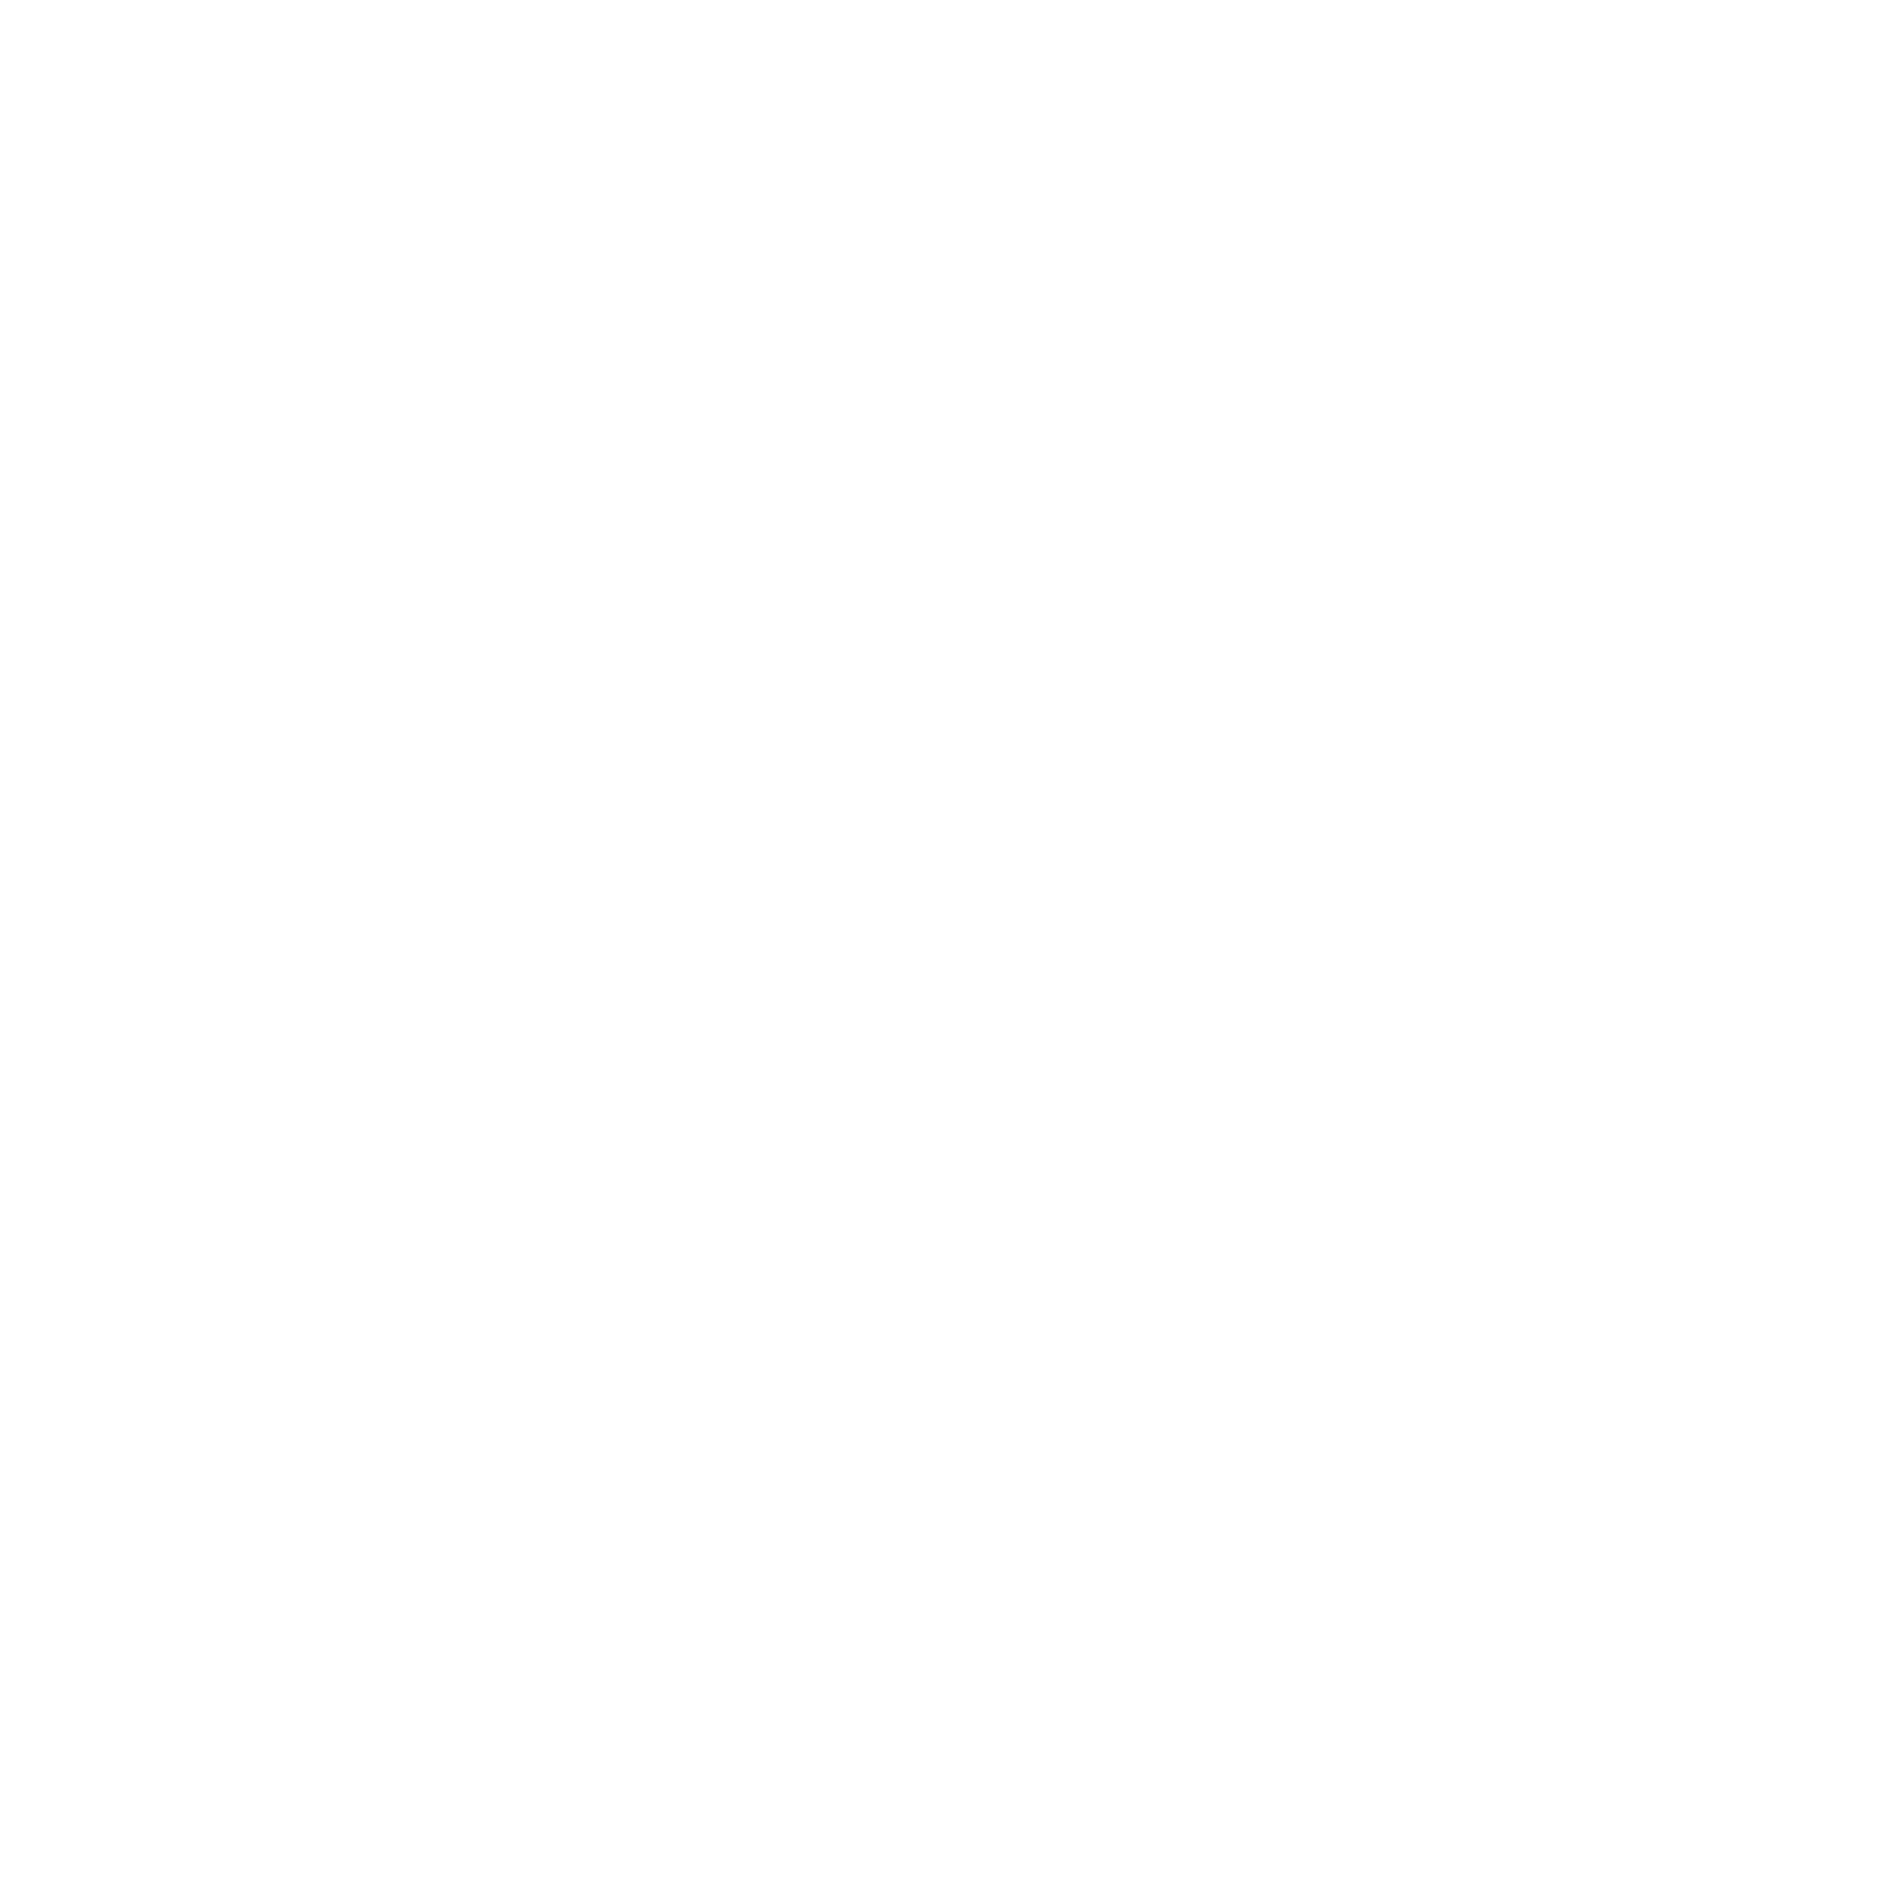 Smith & Wesson logo pour fonds sombres (PNG transparent)